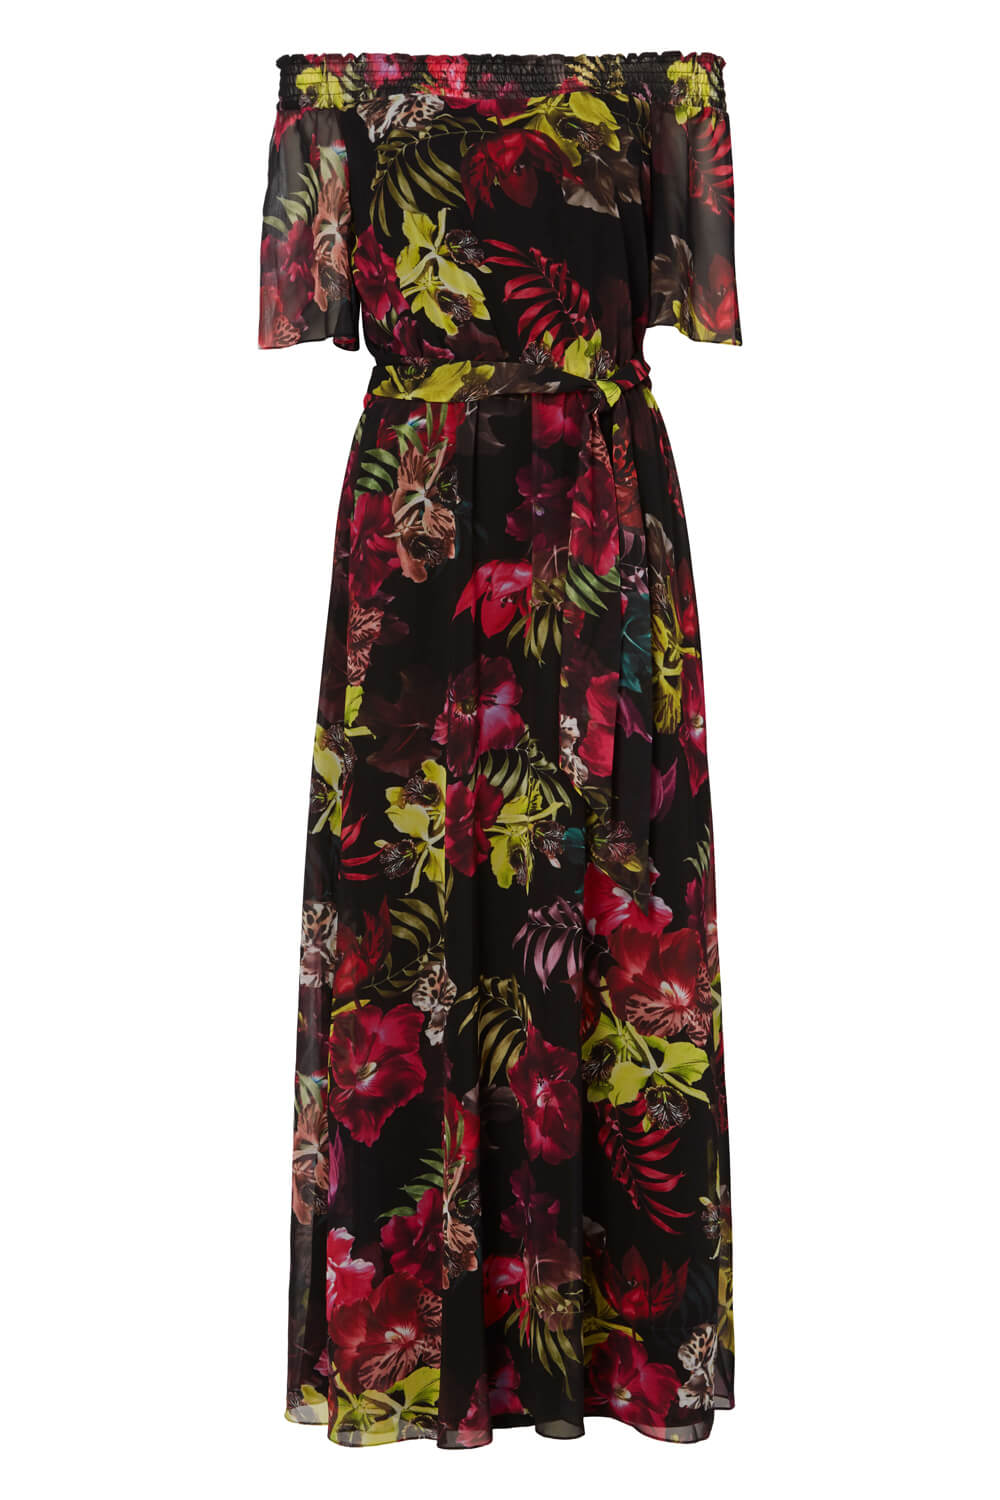 Black Floral Bardot Maxi Dress, Image 5 of 5